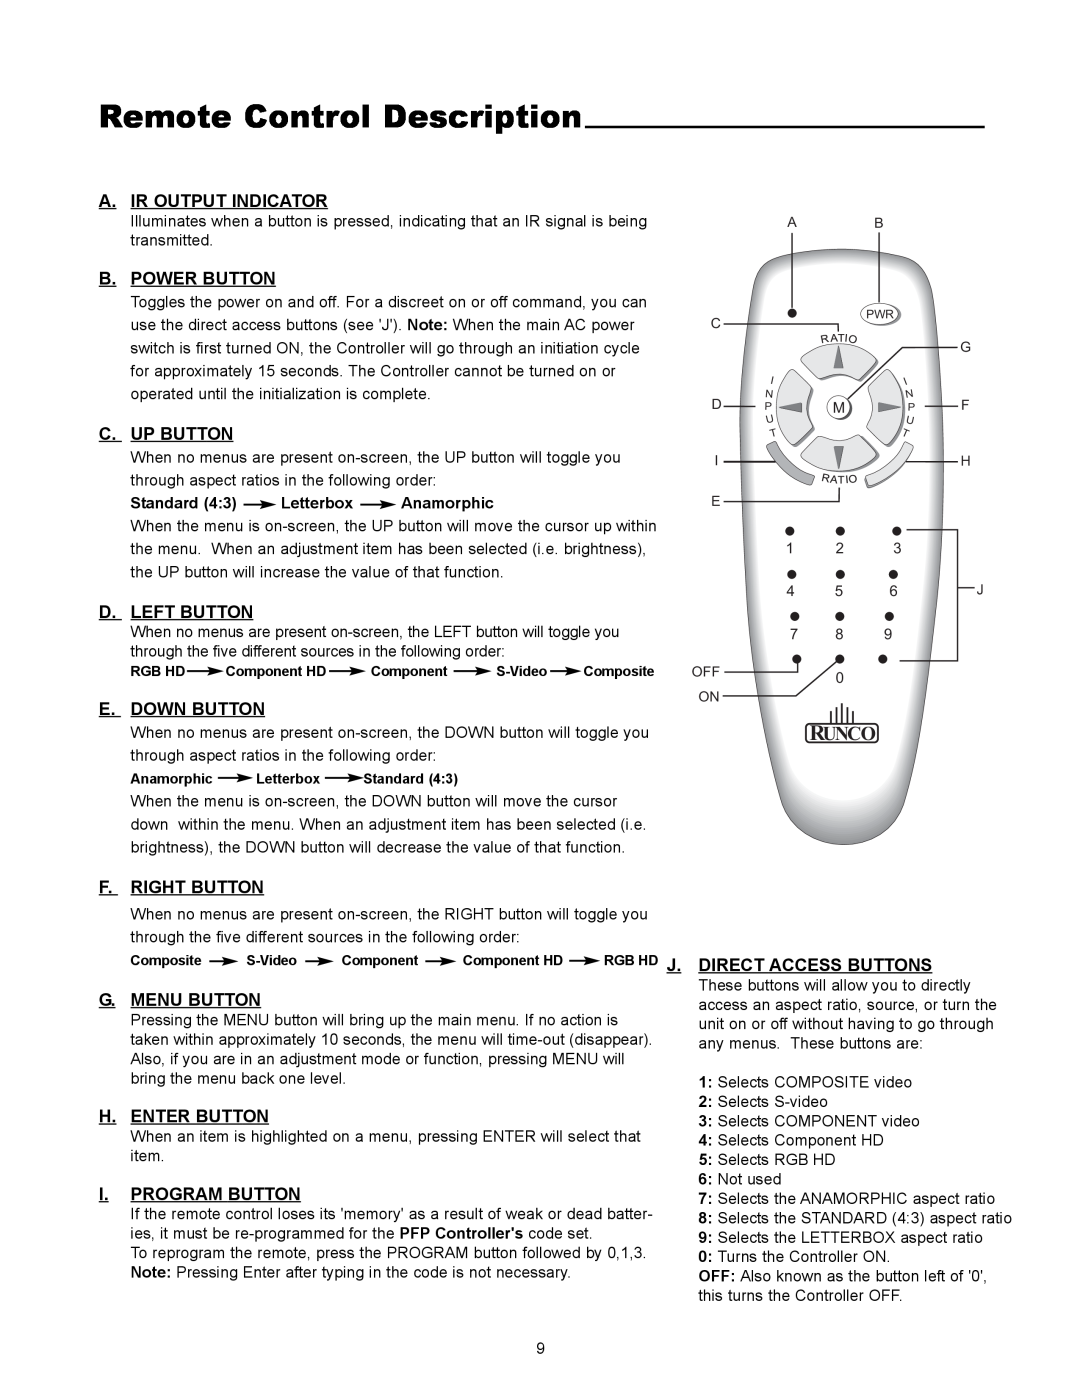 Runco DLC-2000HD user manual Remote Control Description, Runco 